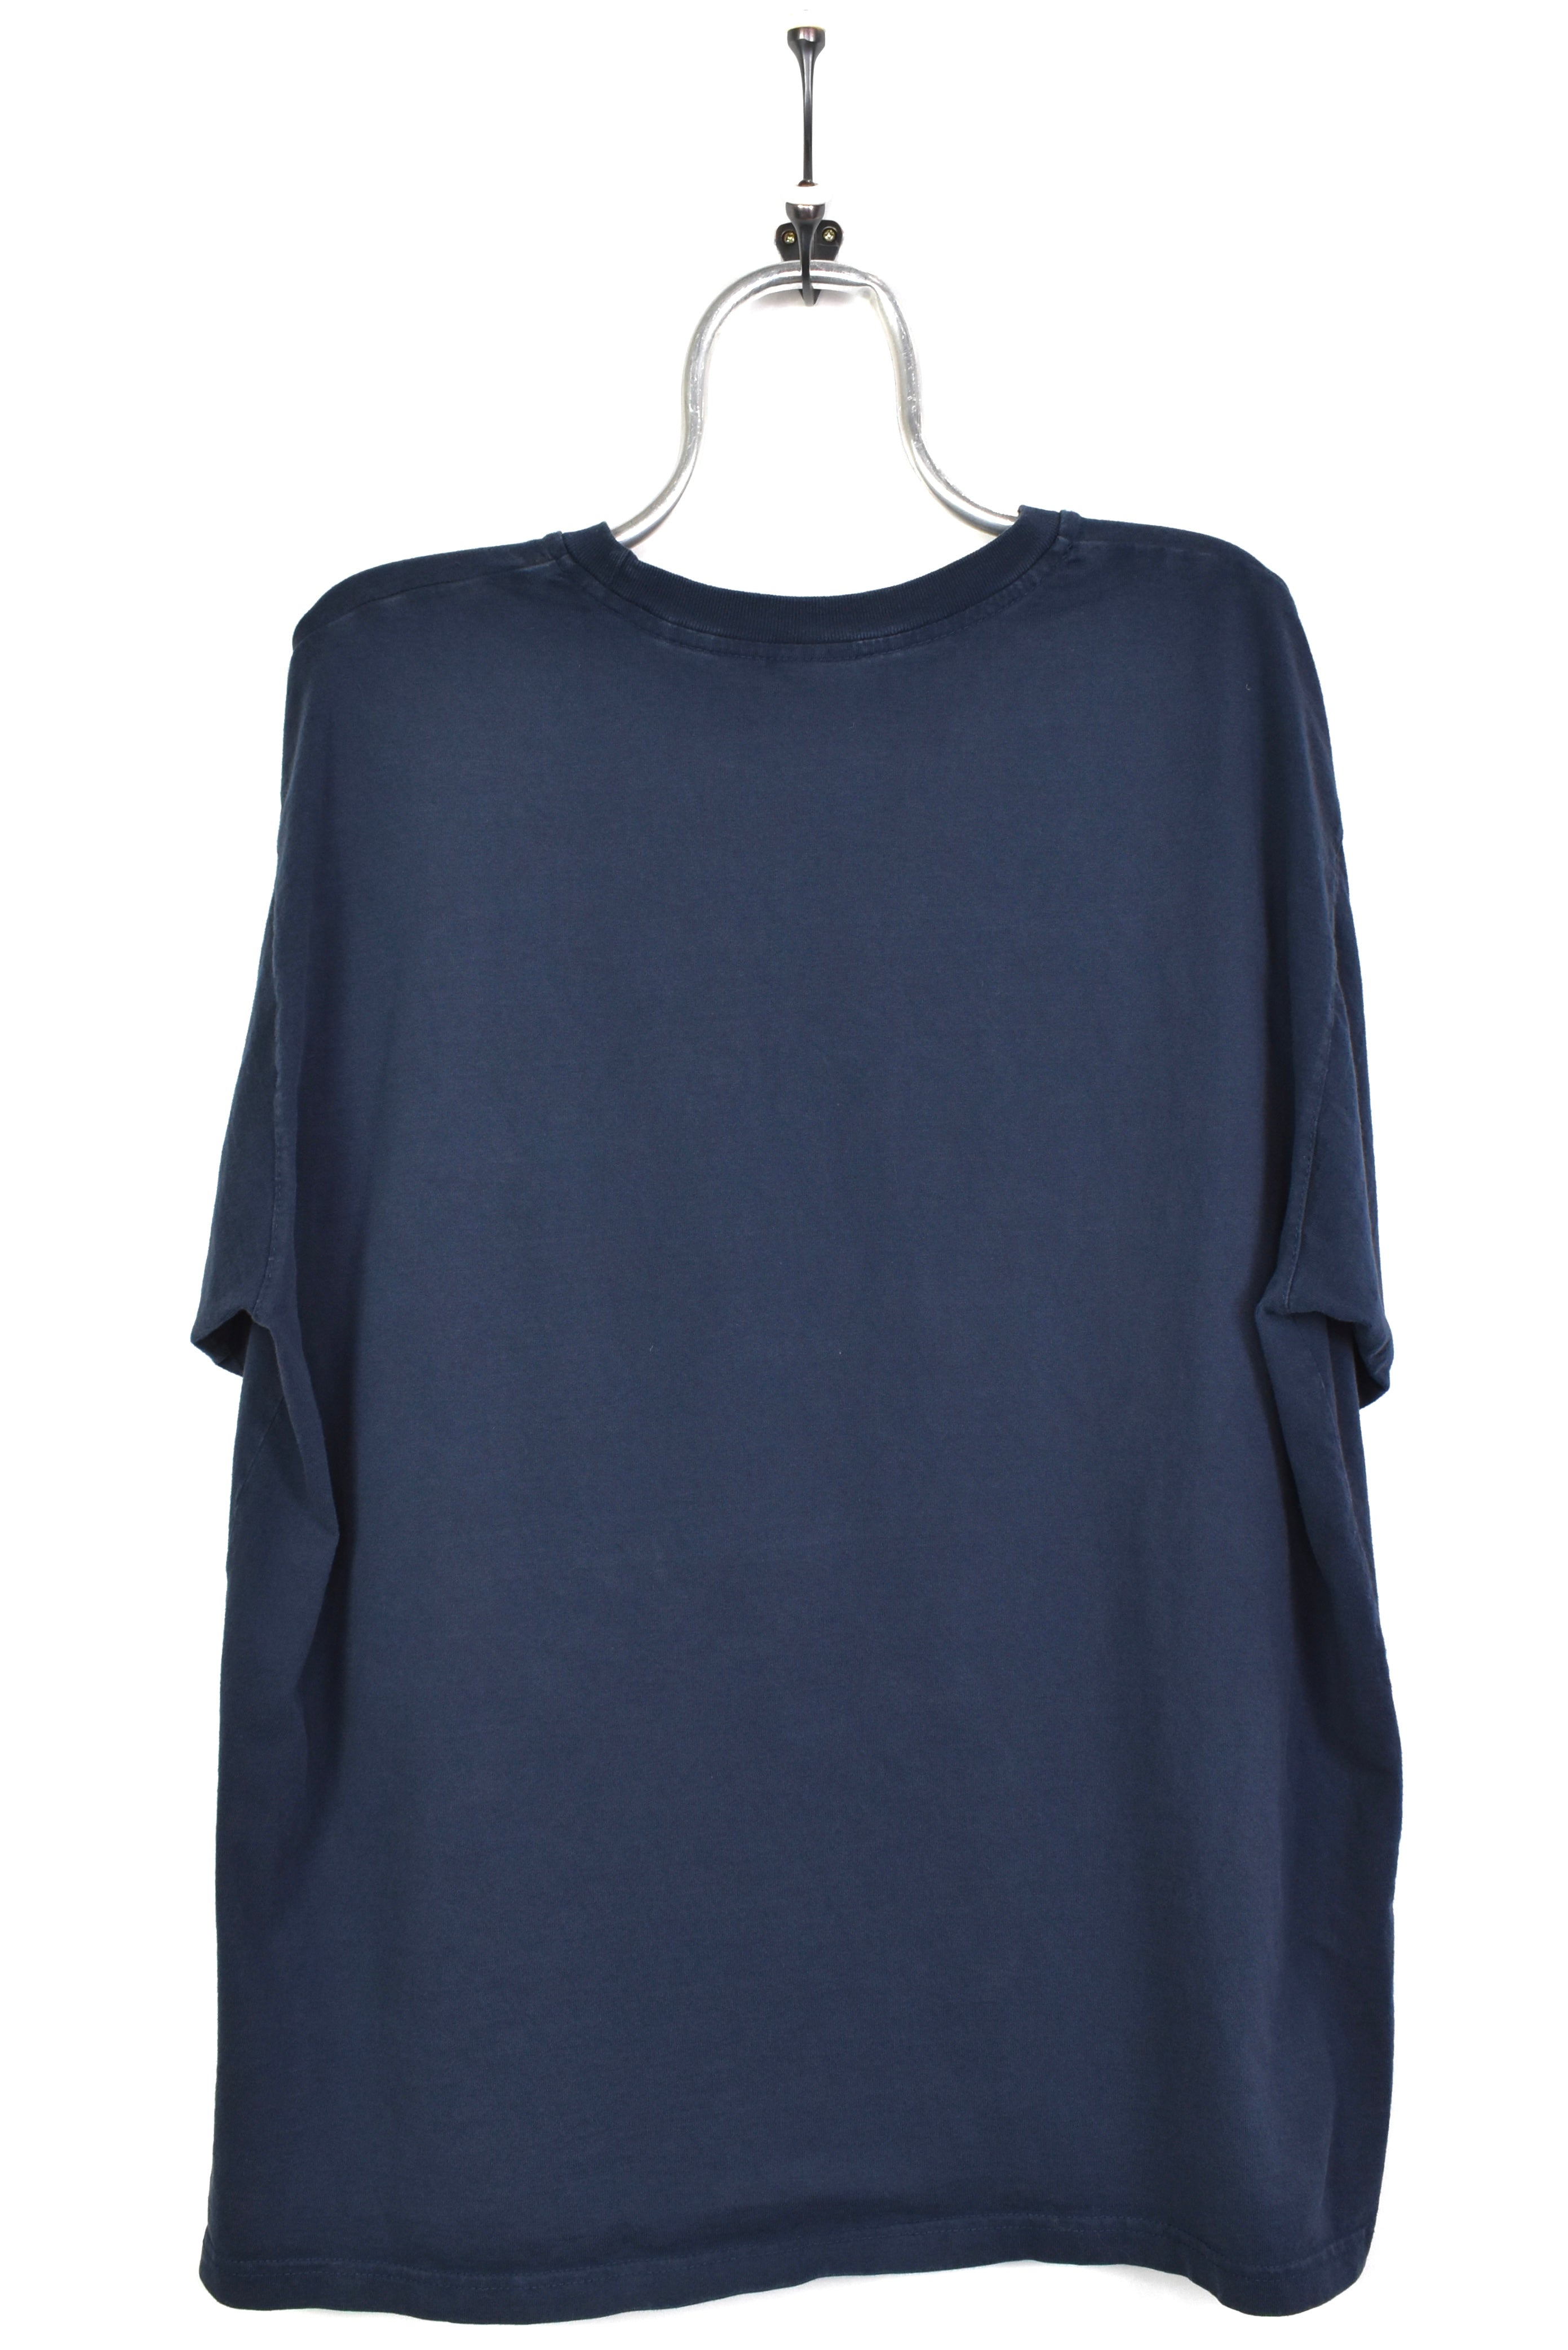 Vintage Nike shirt, short sleeve embroidered tee - XL, navy blue NIKE